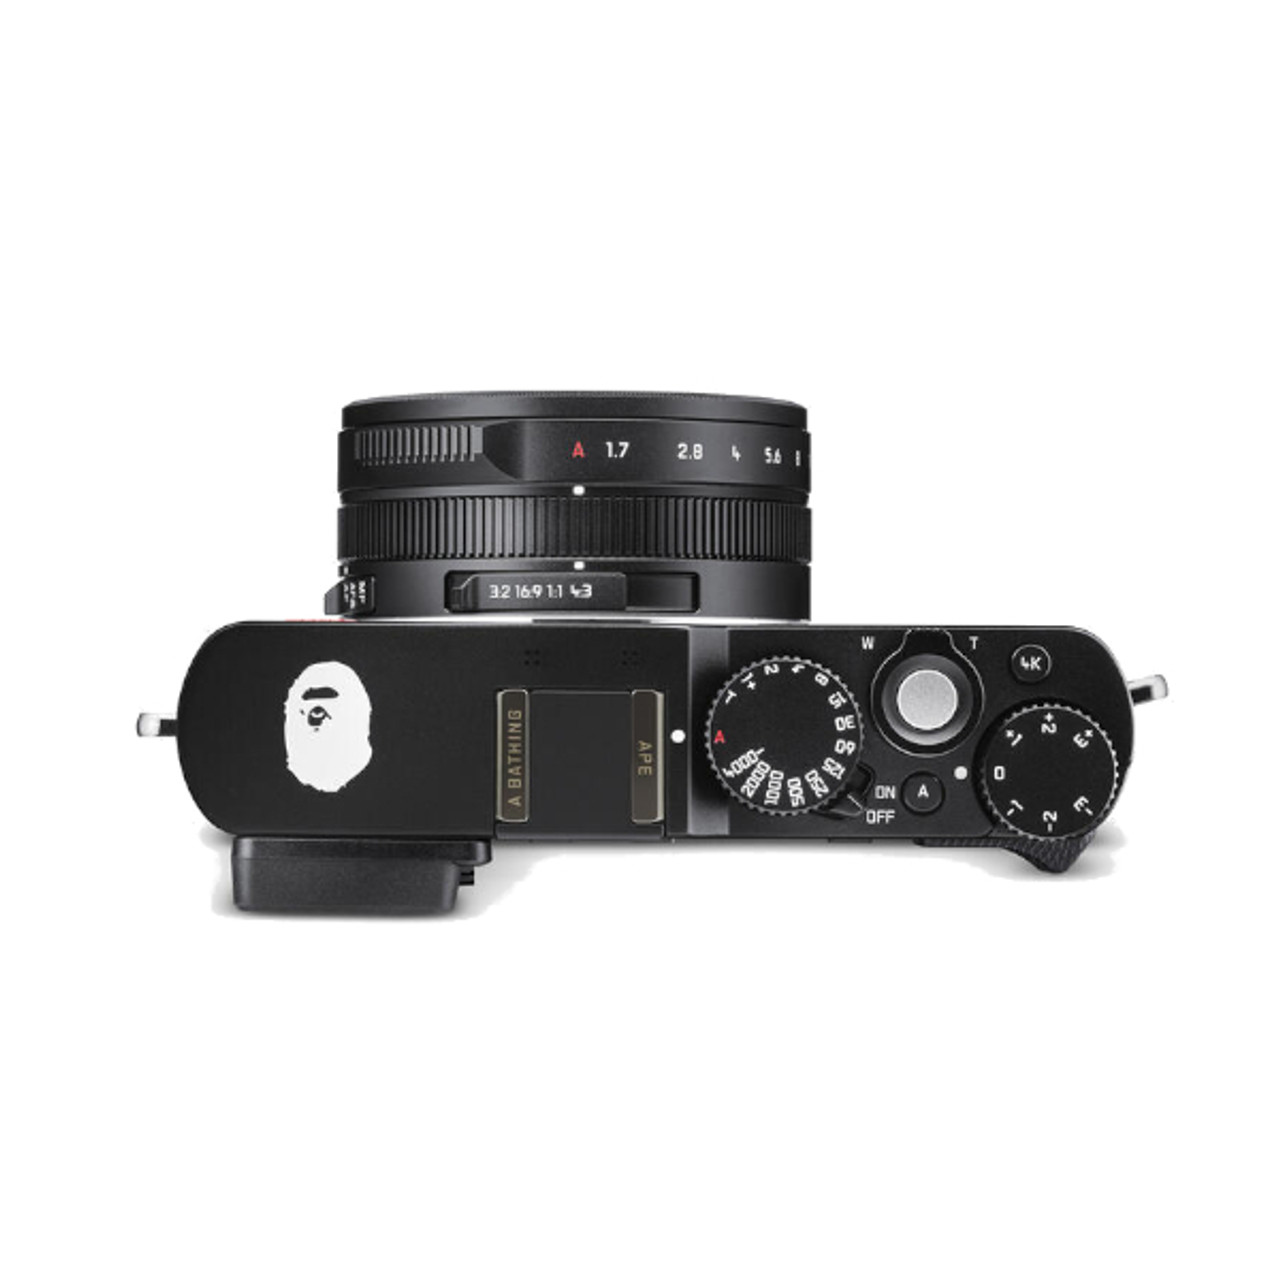 Leica D-Lux 7 â€œA Bathing Ape x STASHâ€ Special Edition